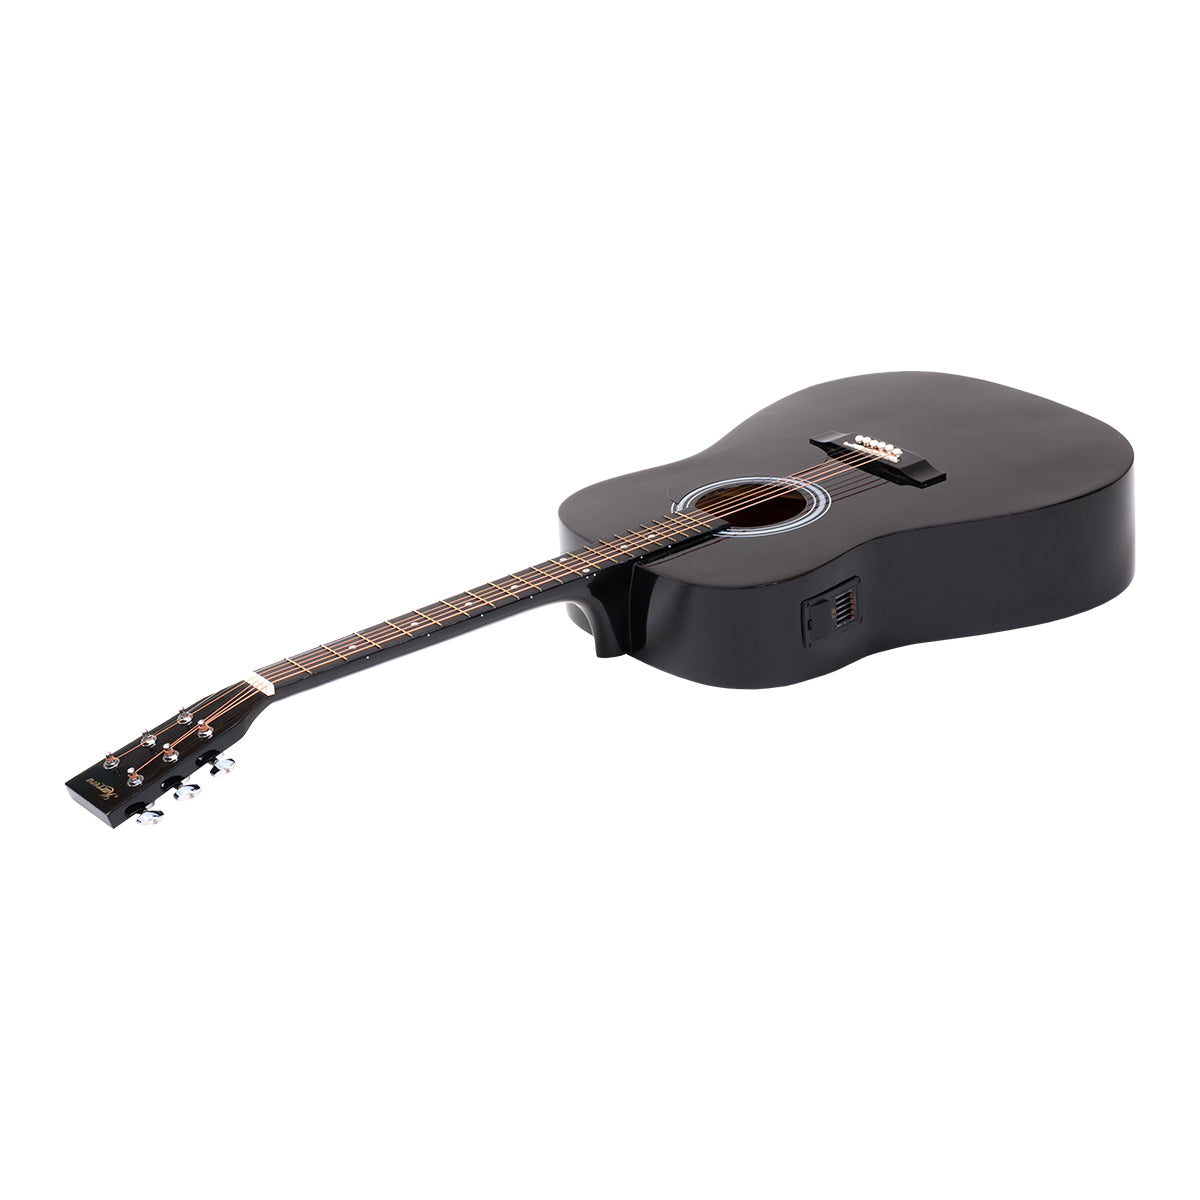 Karrera Electronic Acoustic Guitar 41in  - Black - SILBERSHELL